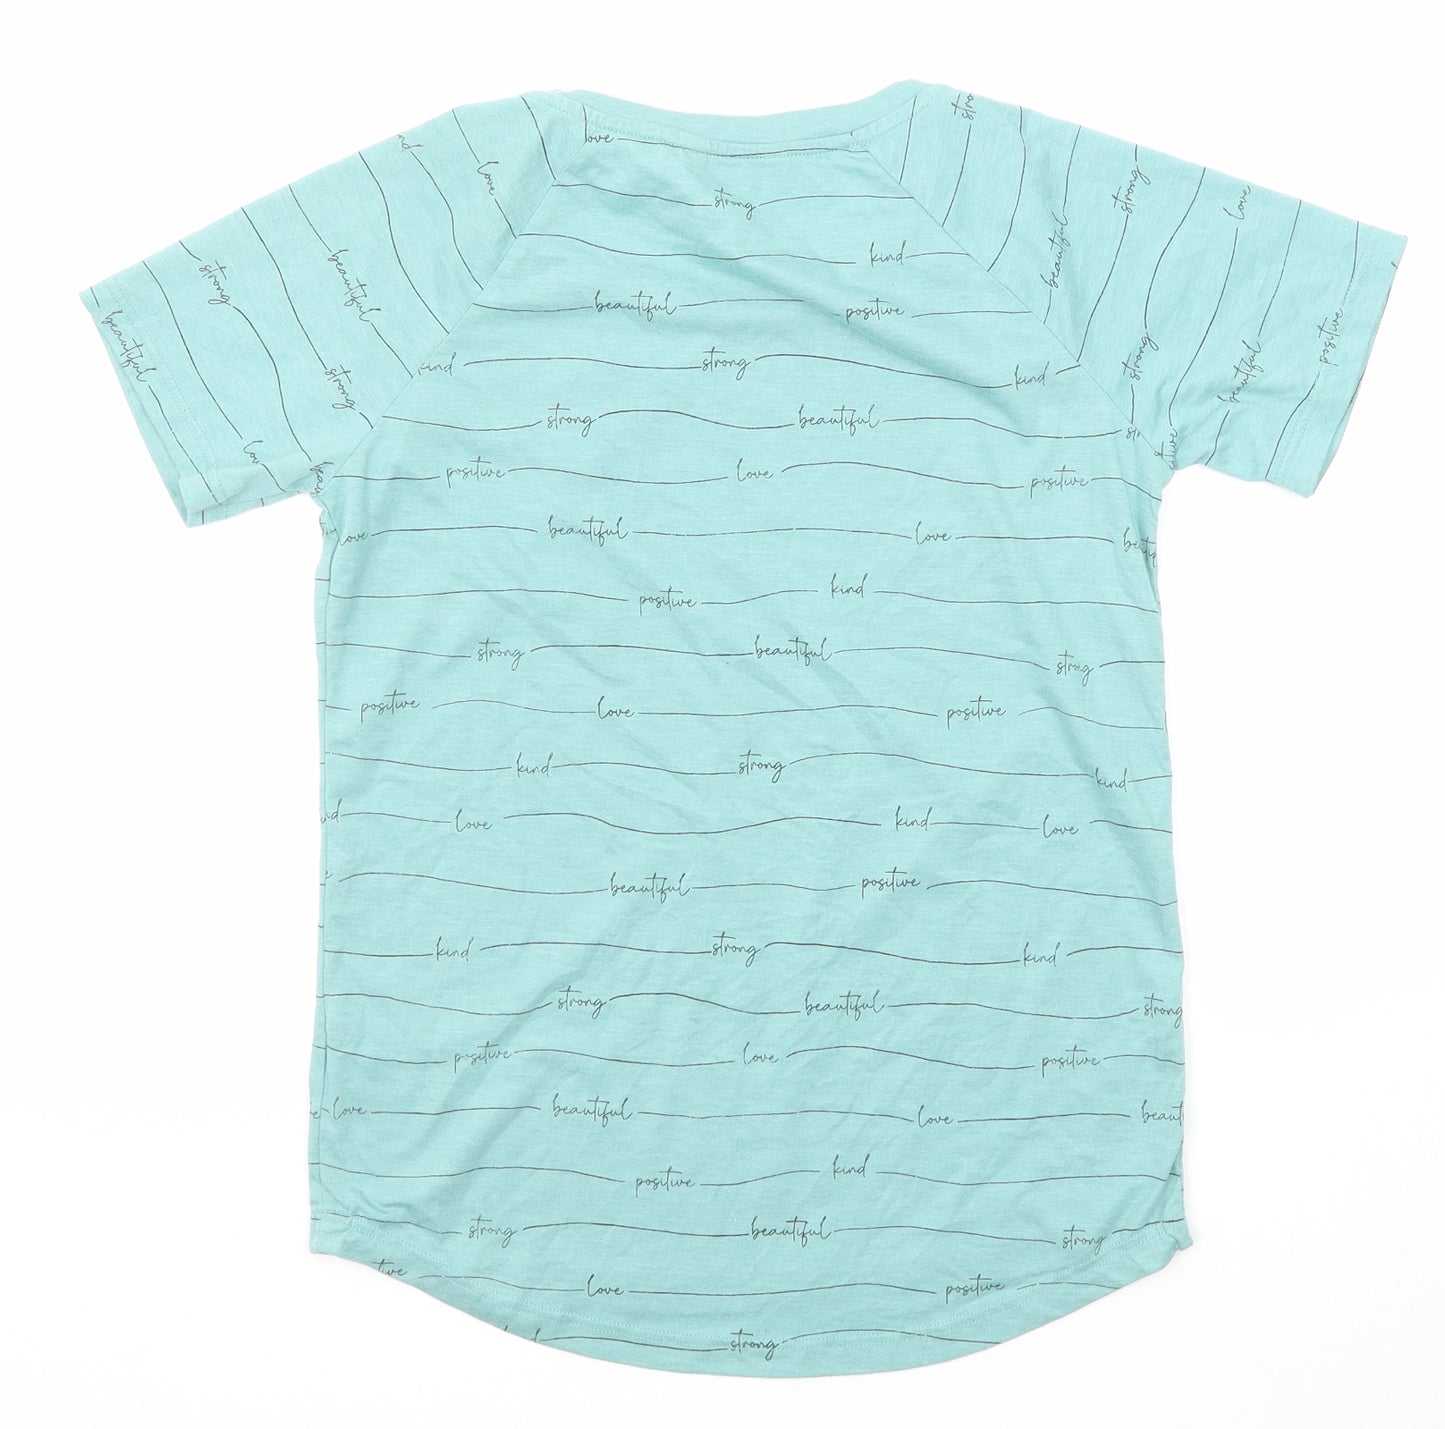 NEXT Womens Blue Striped Cotton Basic T-Shirt Size 6 Round Neck